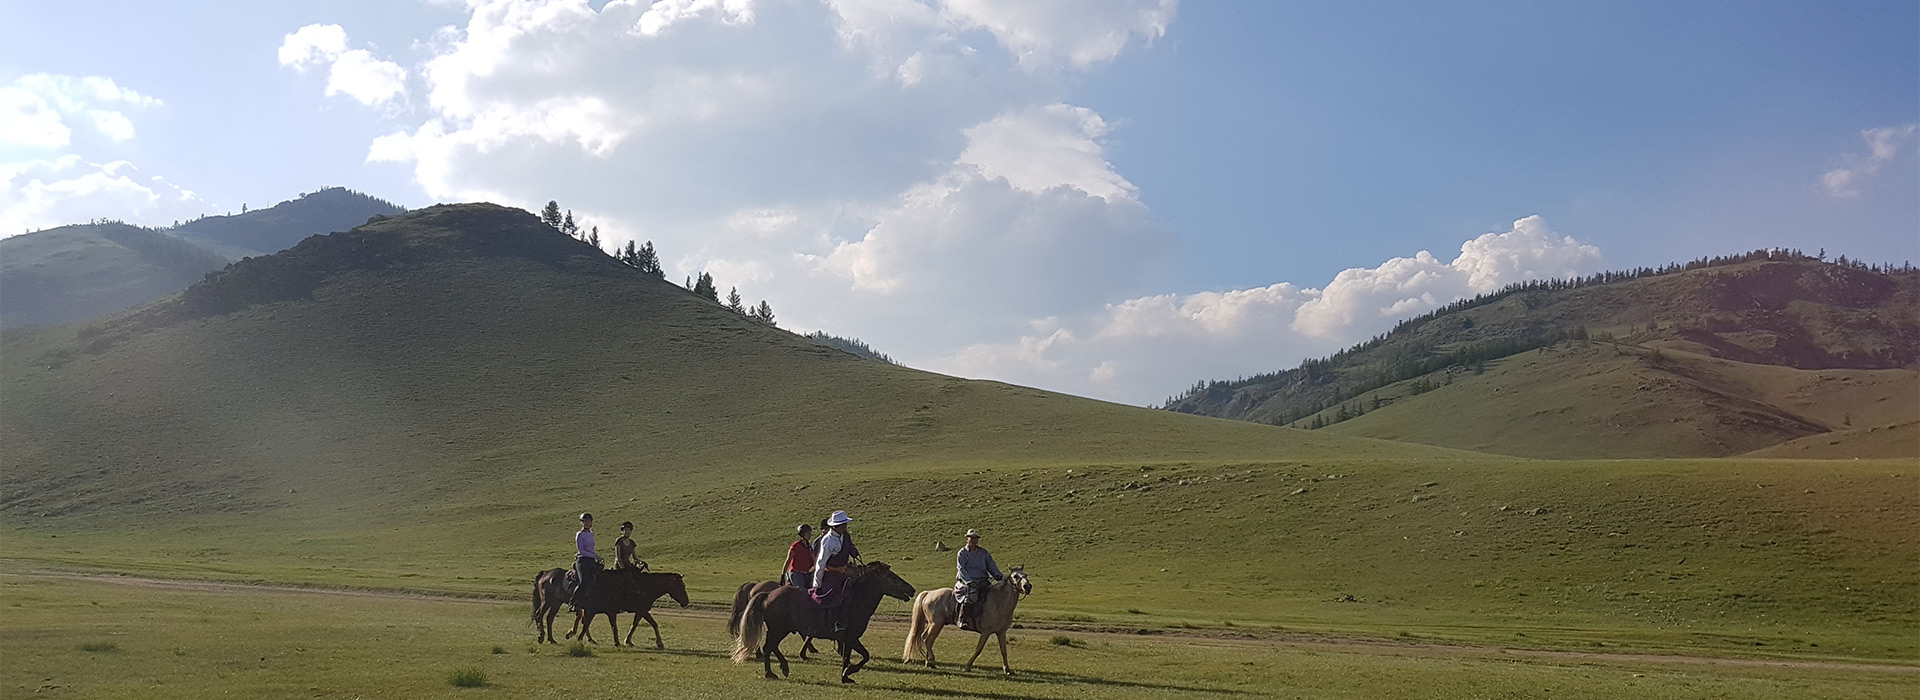 horseback-journeys-mongolia